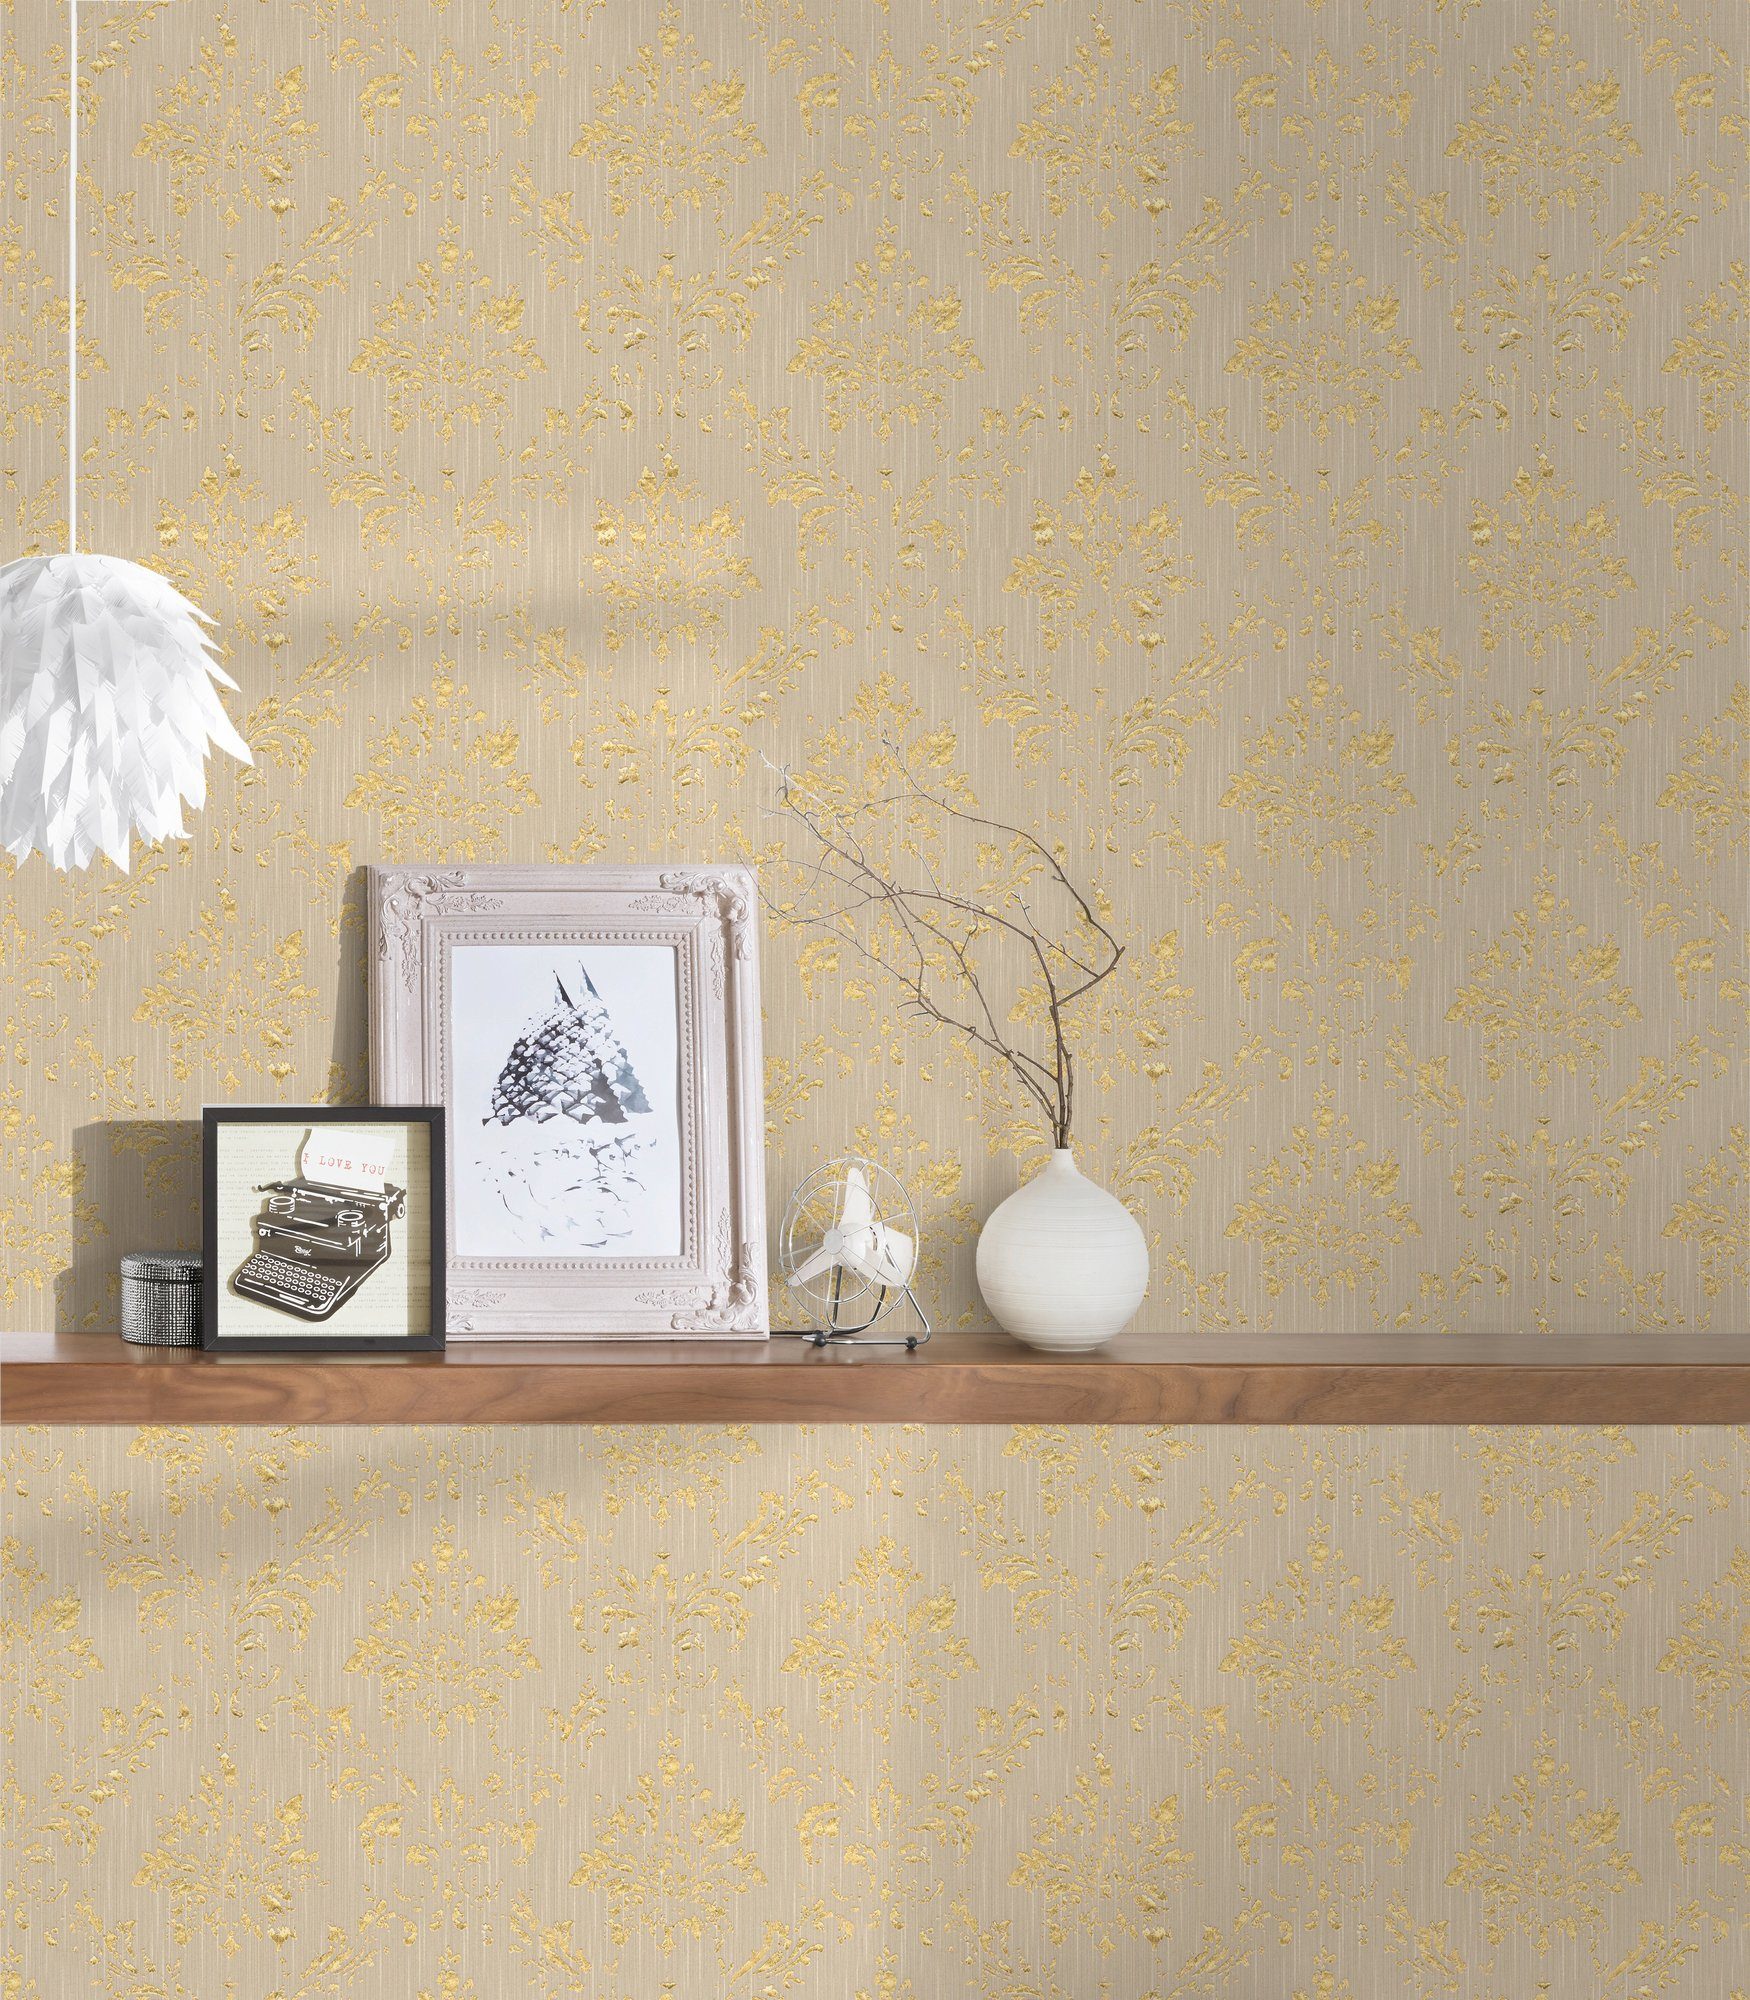 Barock samtig, Silk, Architects beige/gold Barock, Paper Metallic matt, Textiltapete Ornament Tapete glänzend,